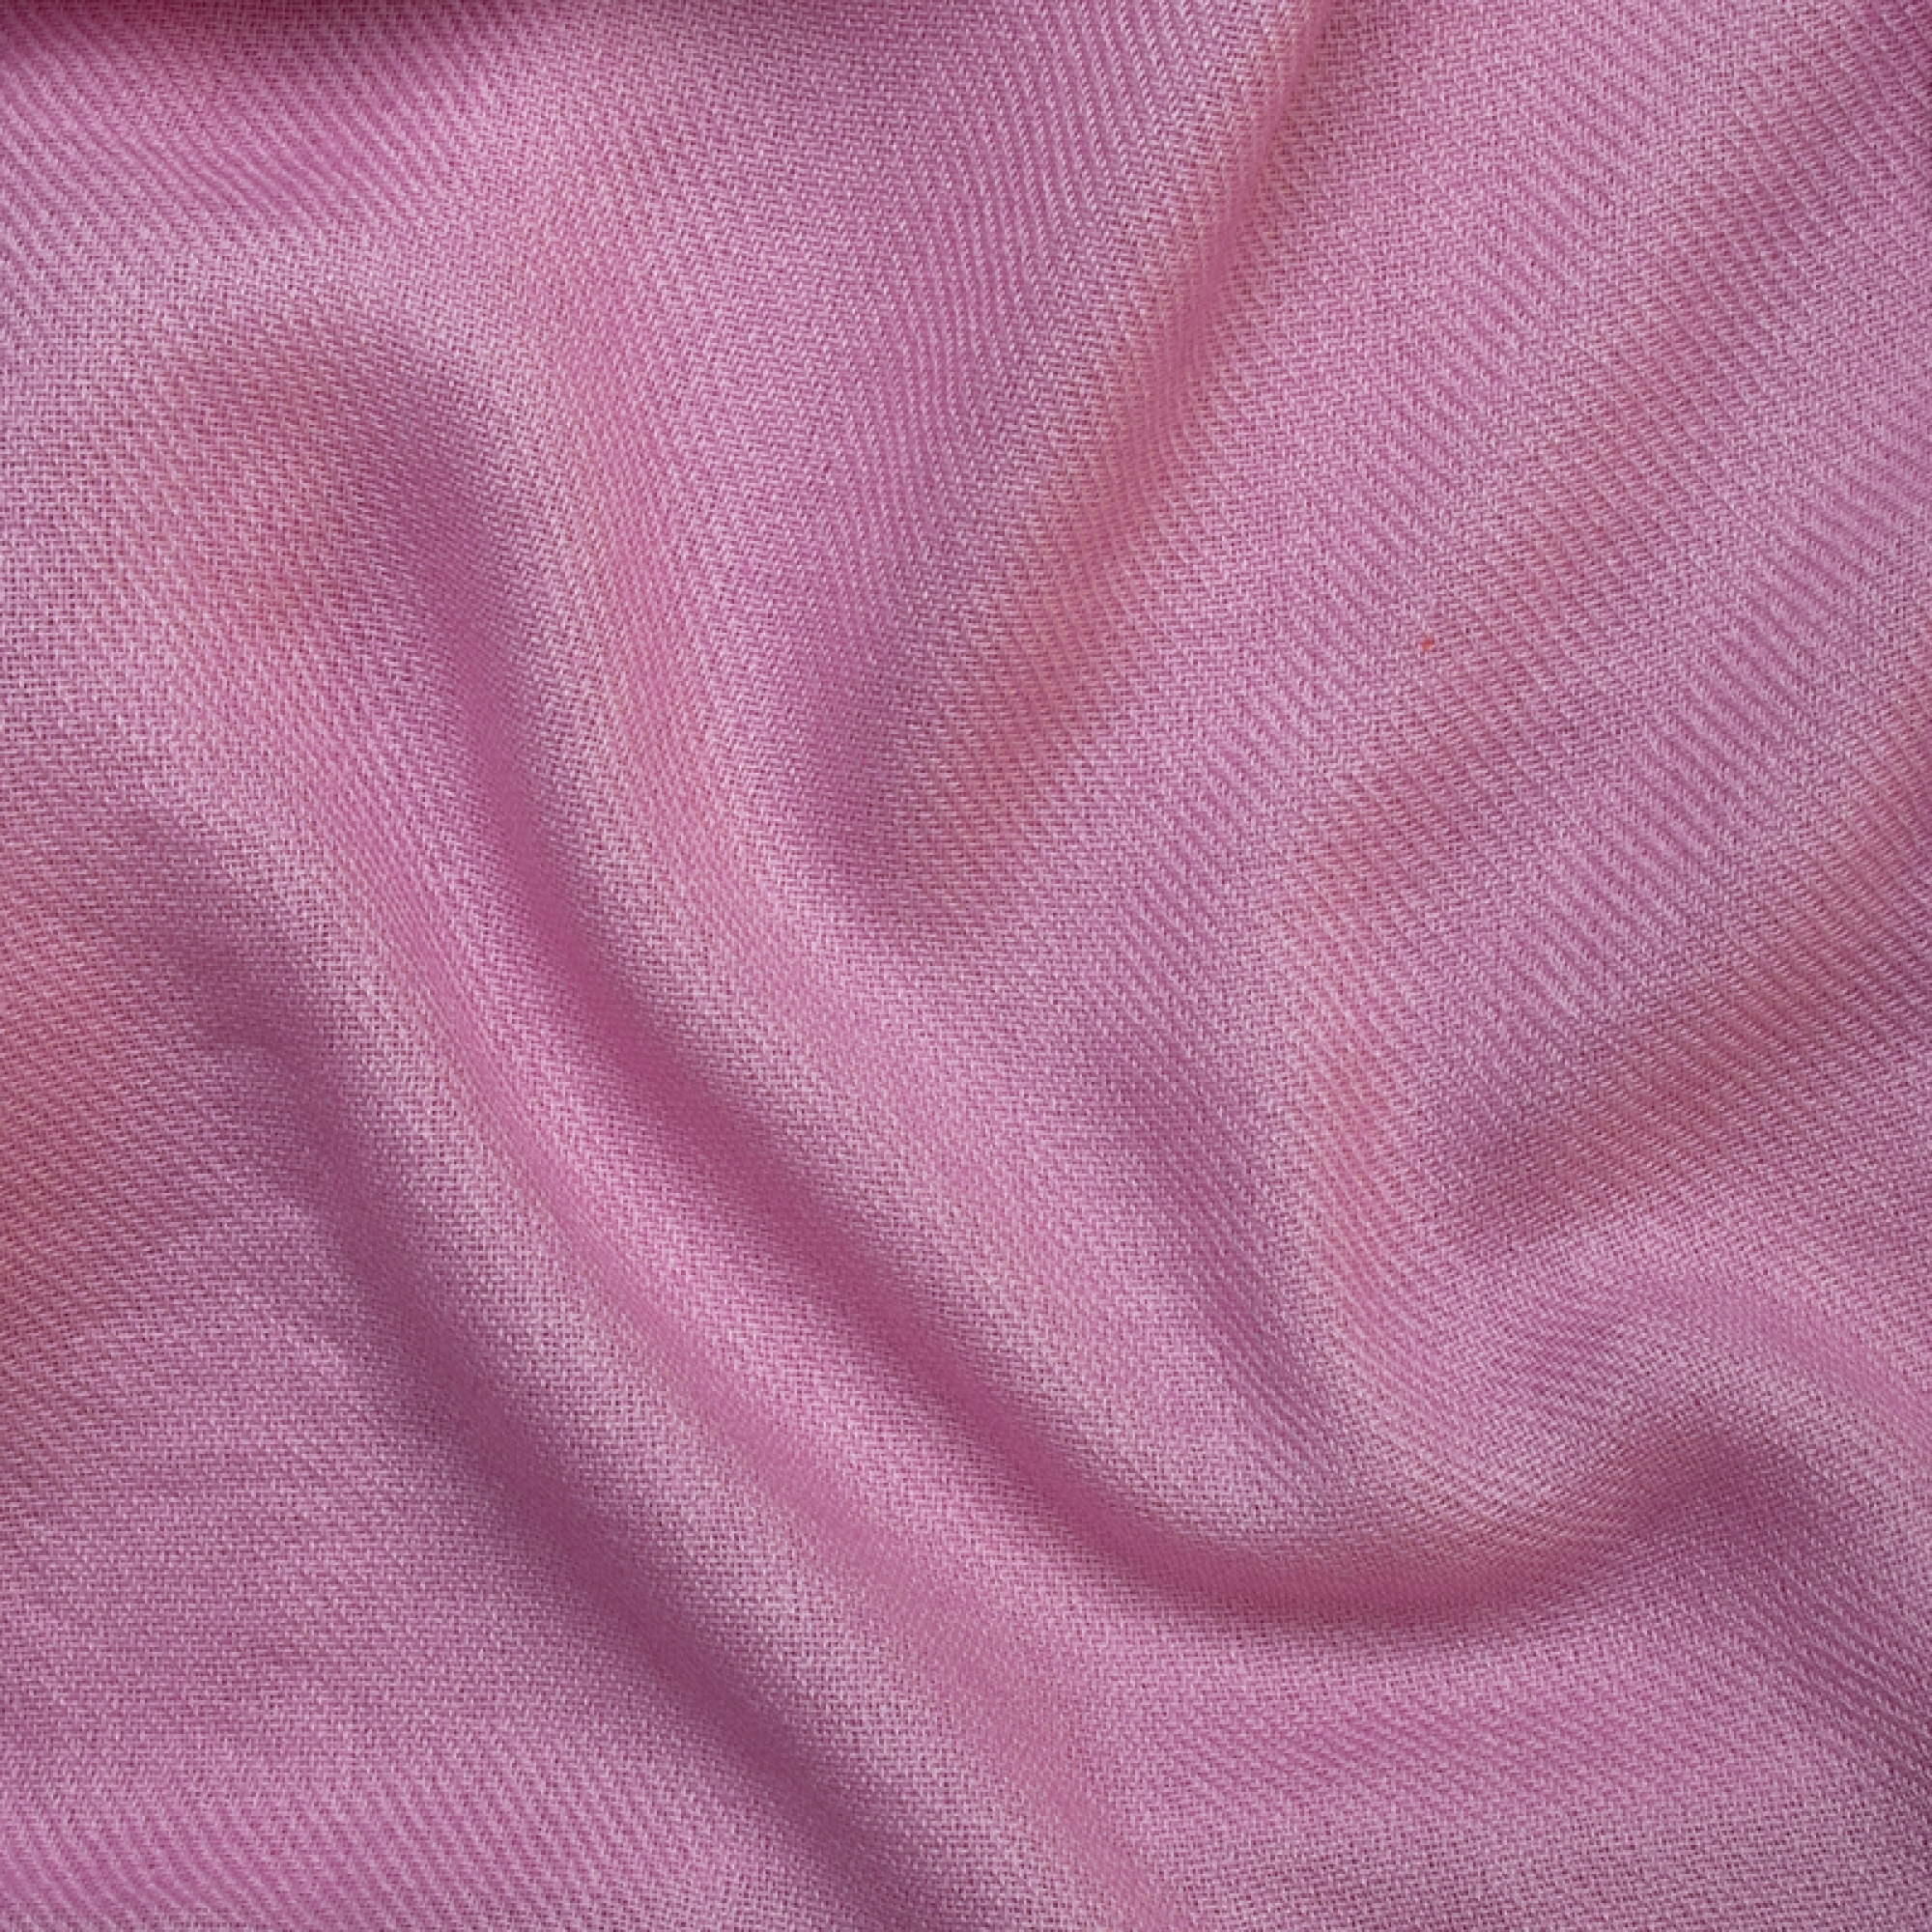 Cashmere accessories frisbi 147 x 203 pink lavender 147 x 203 cm